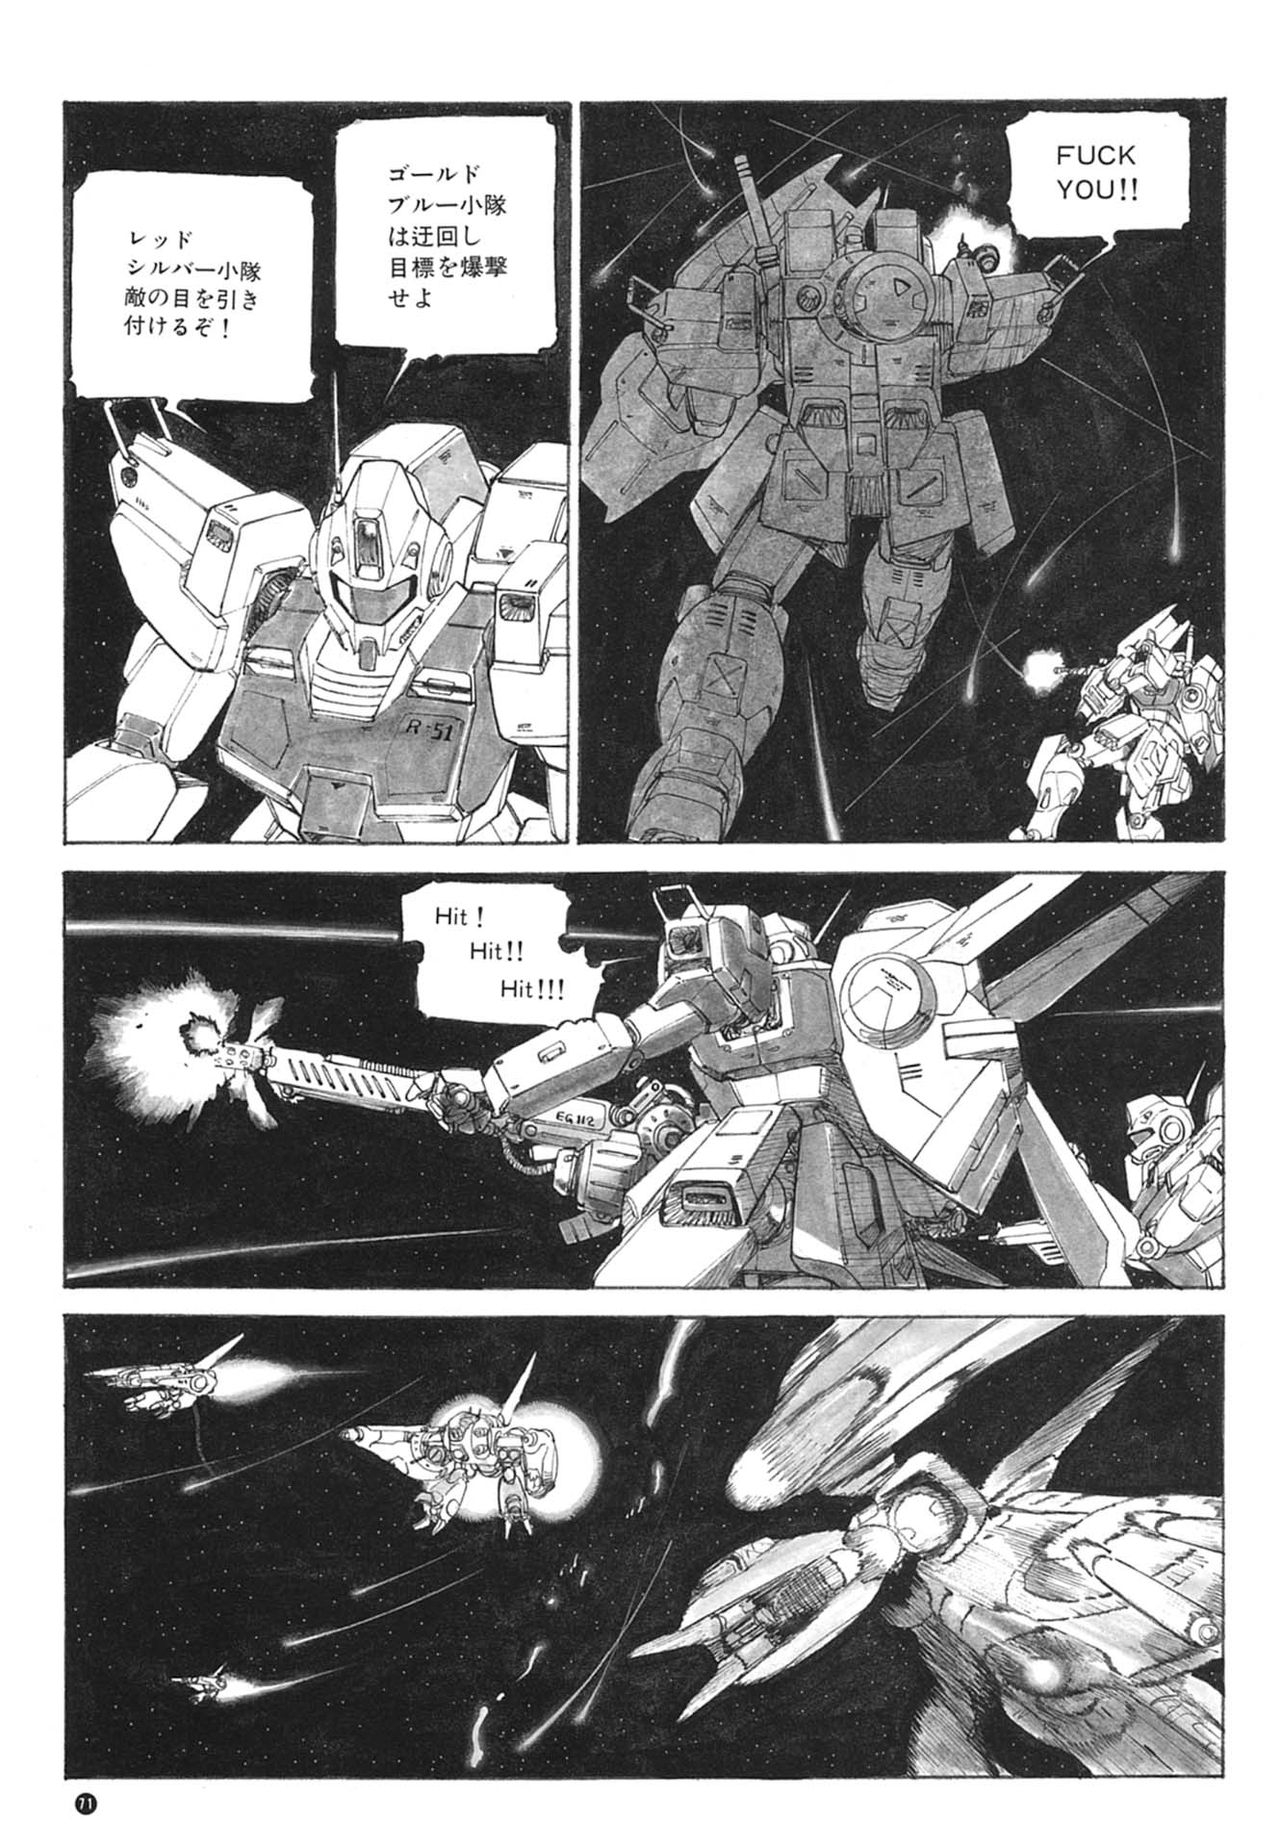 [Kazuhisa Kondo] Kazuhisa Kondo 2D & 3D Works - Go Ahead - From Mobile Suit Gundam to Original Mechanism 70